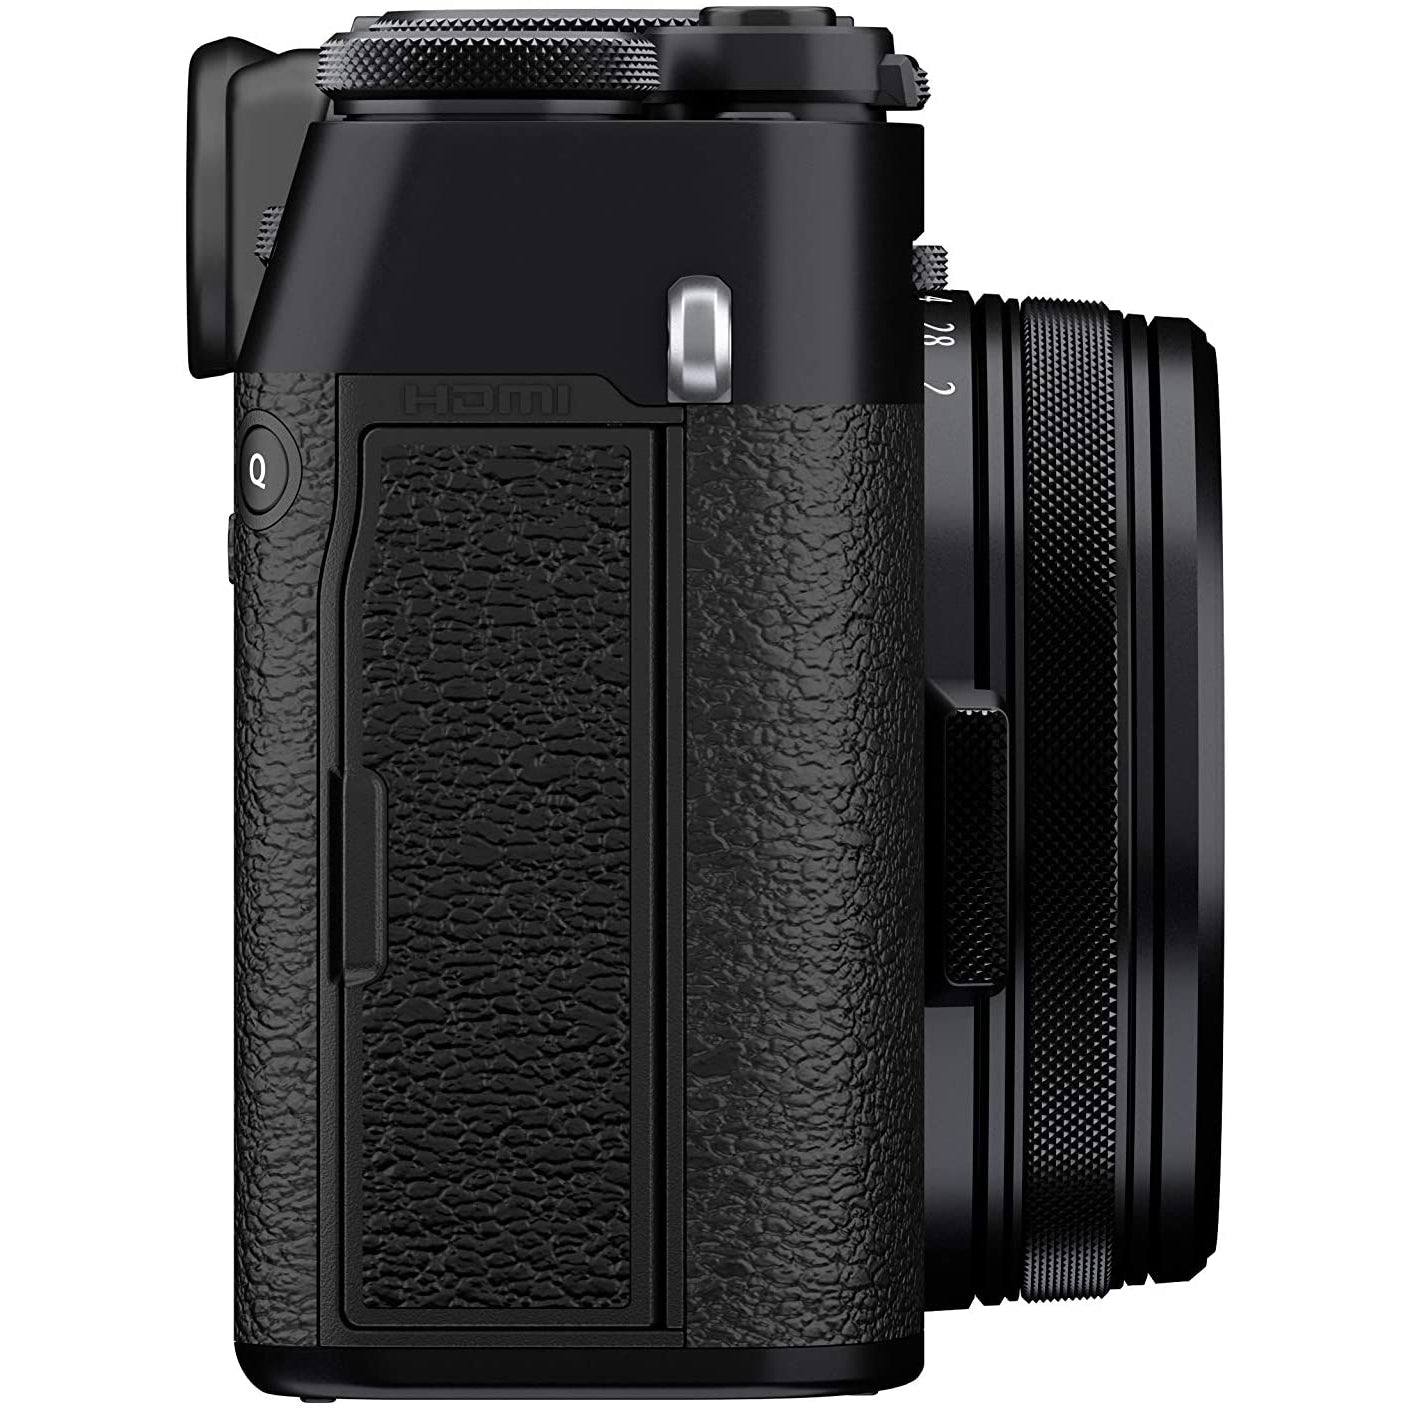 Fujifilm X100V Digital Compact Camera with 23mm Lens, 4K Ultra HD, 26.1MP